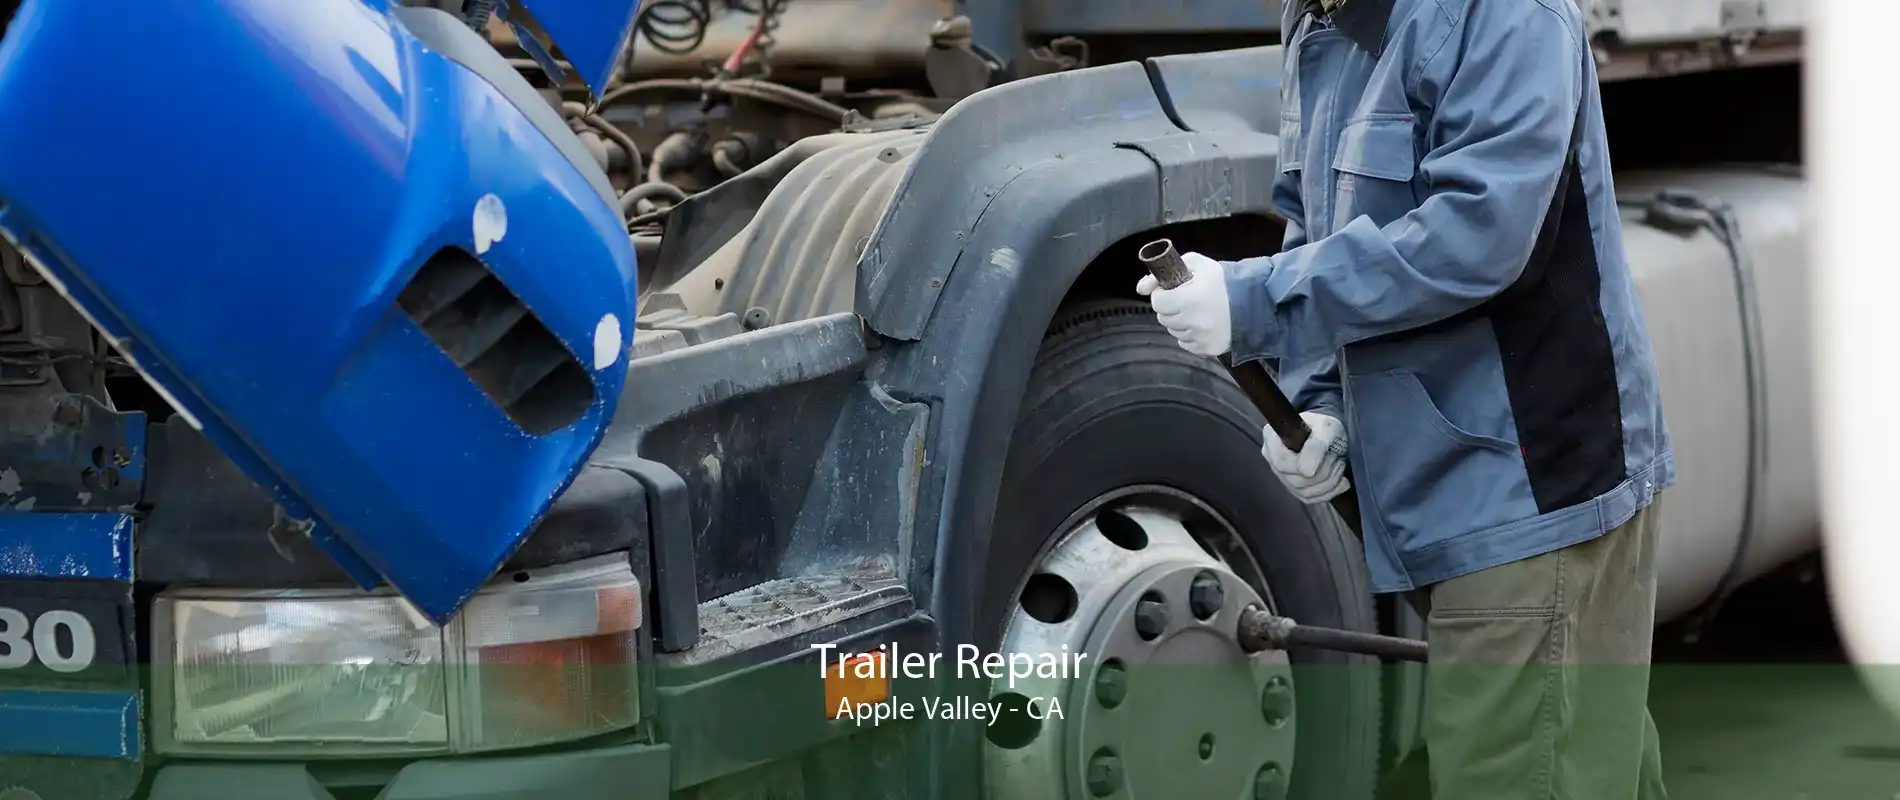 Trailer Repair Apple Valley - CA